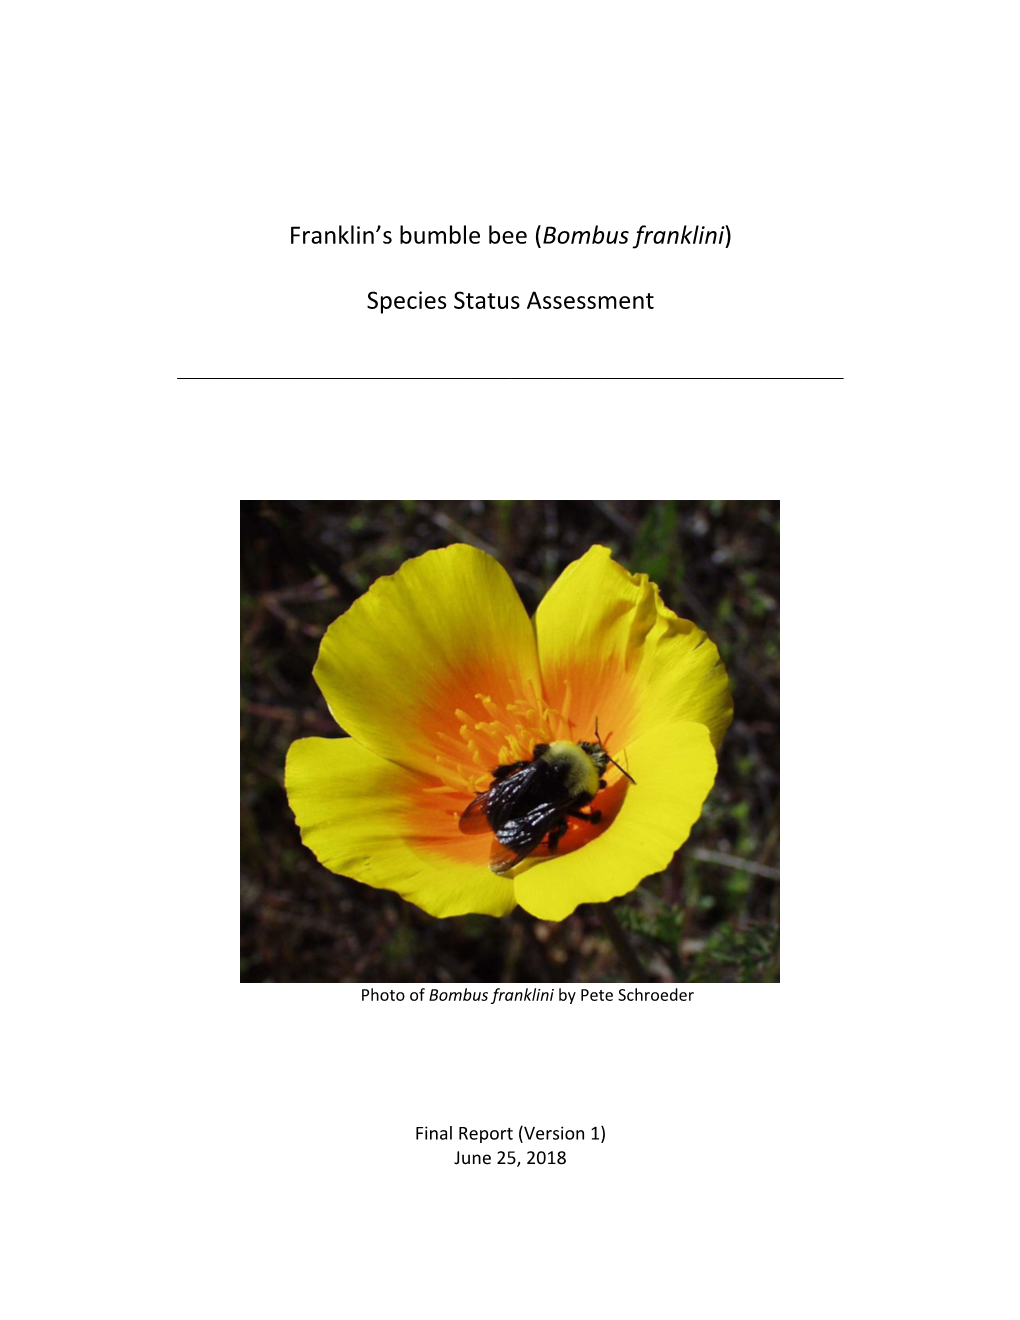 Franklin's Bumble Bee (Bombus Franklini) Species Status Assessment